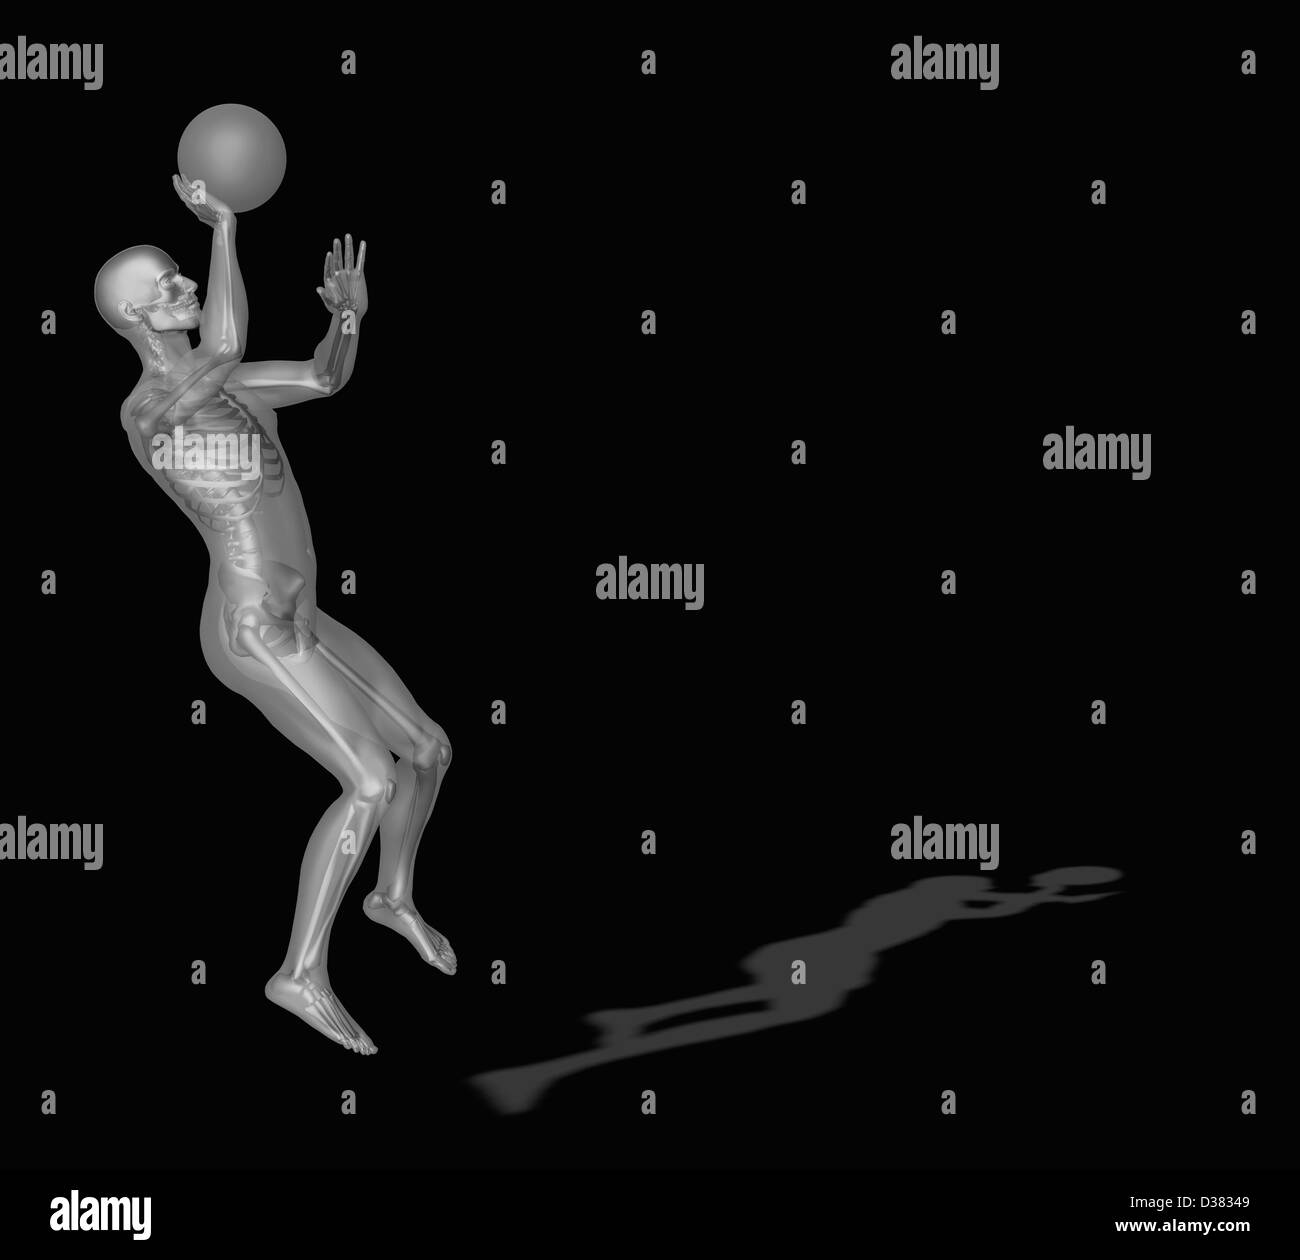 Digitally generated image of human representation playing basketball Stock Photo